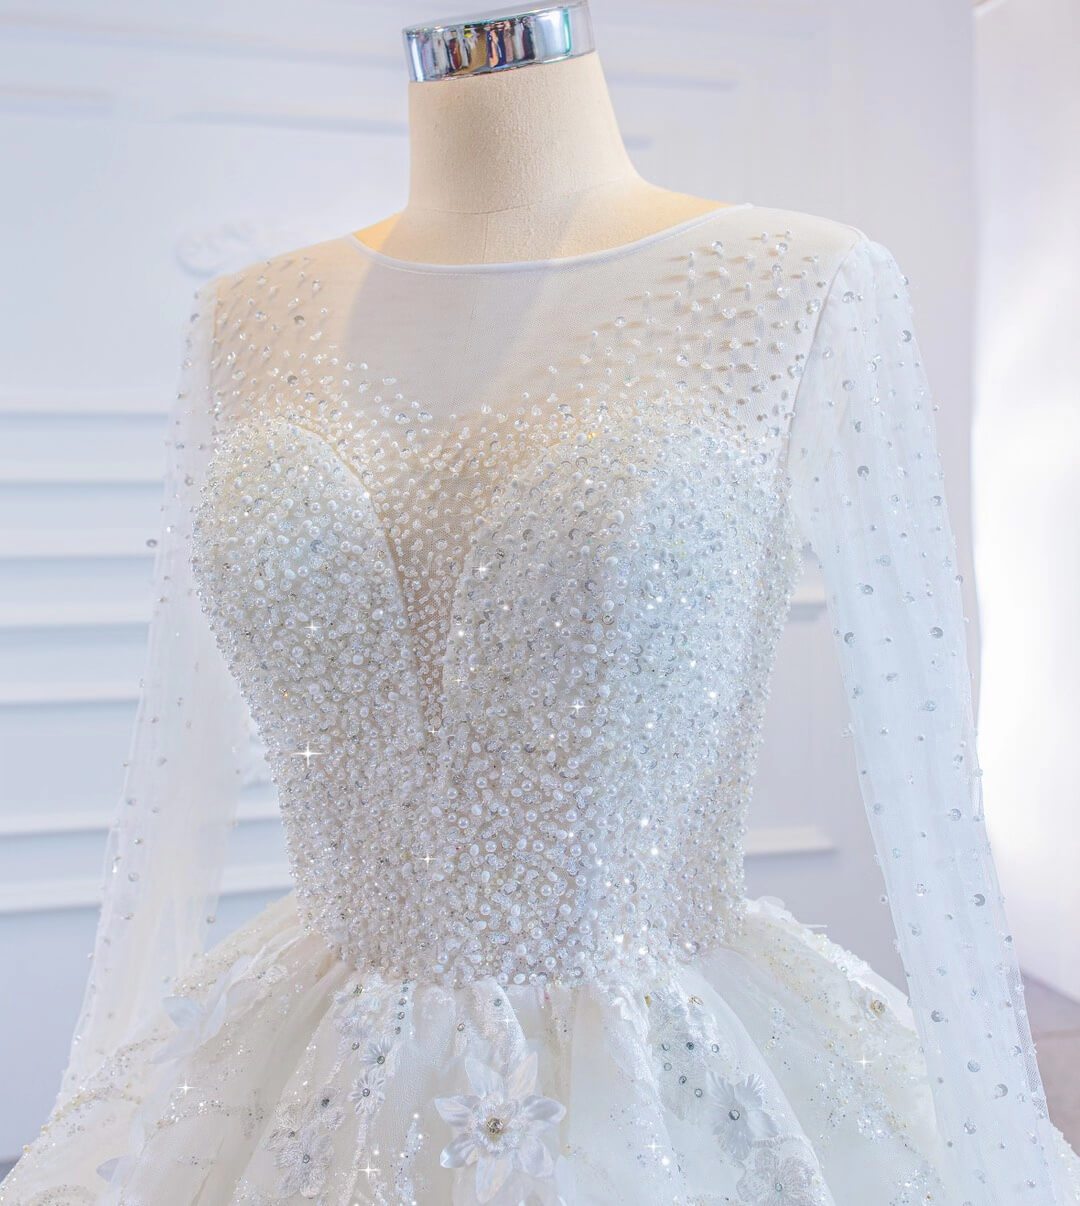 Sparkly 3D Flower Princess Wedding Dresses with Sleeves 67183-wedding dresses-Viniodress-Viniodress